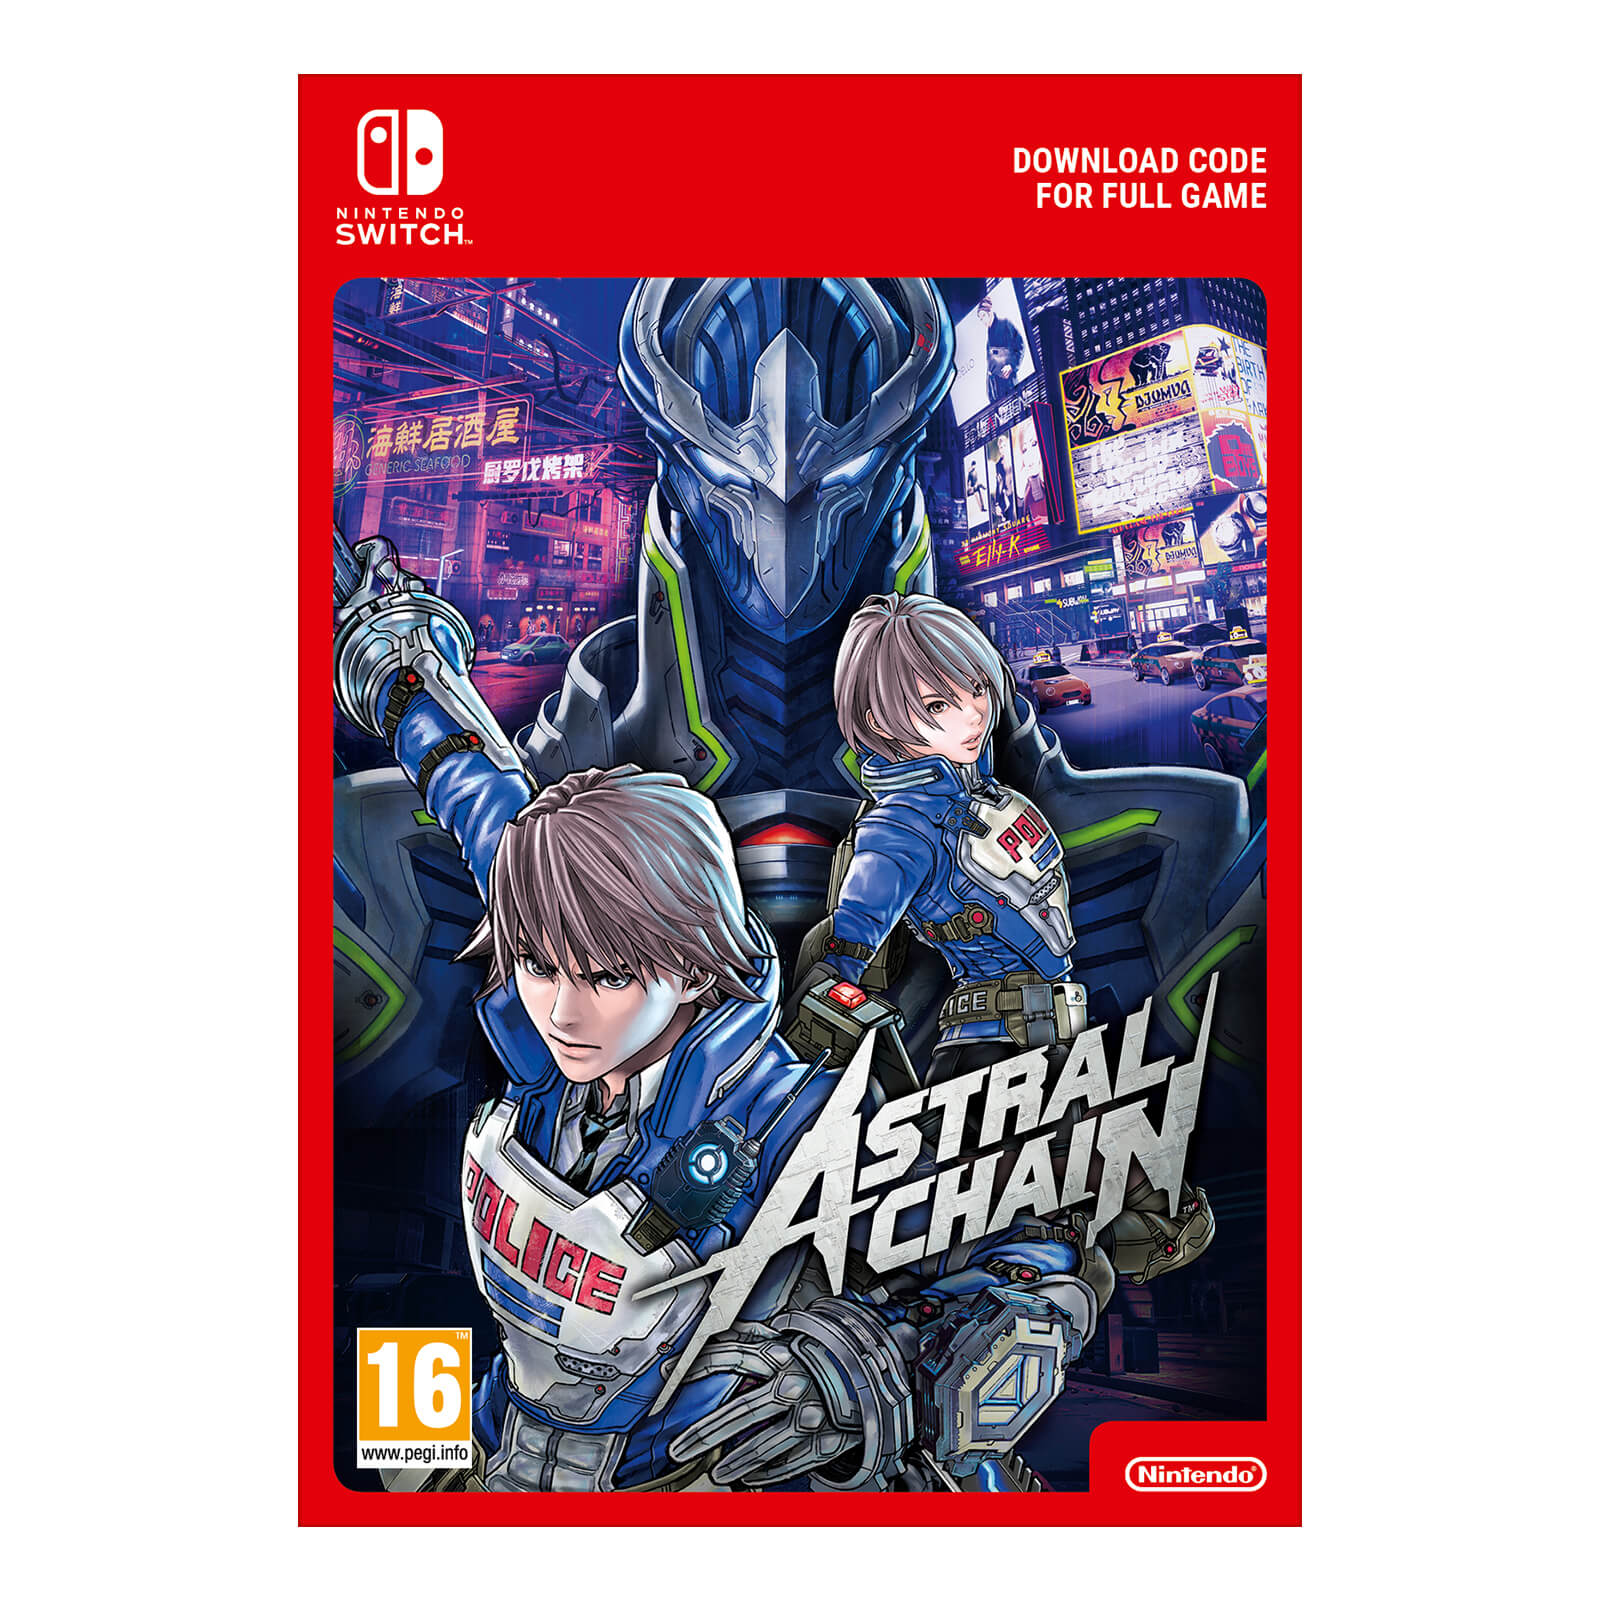 Astral chain nintendo. Астрал чейн Нинтендо свитч. Astral Chain Nintendo Switch. Astral Chain обложка.